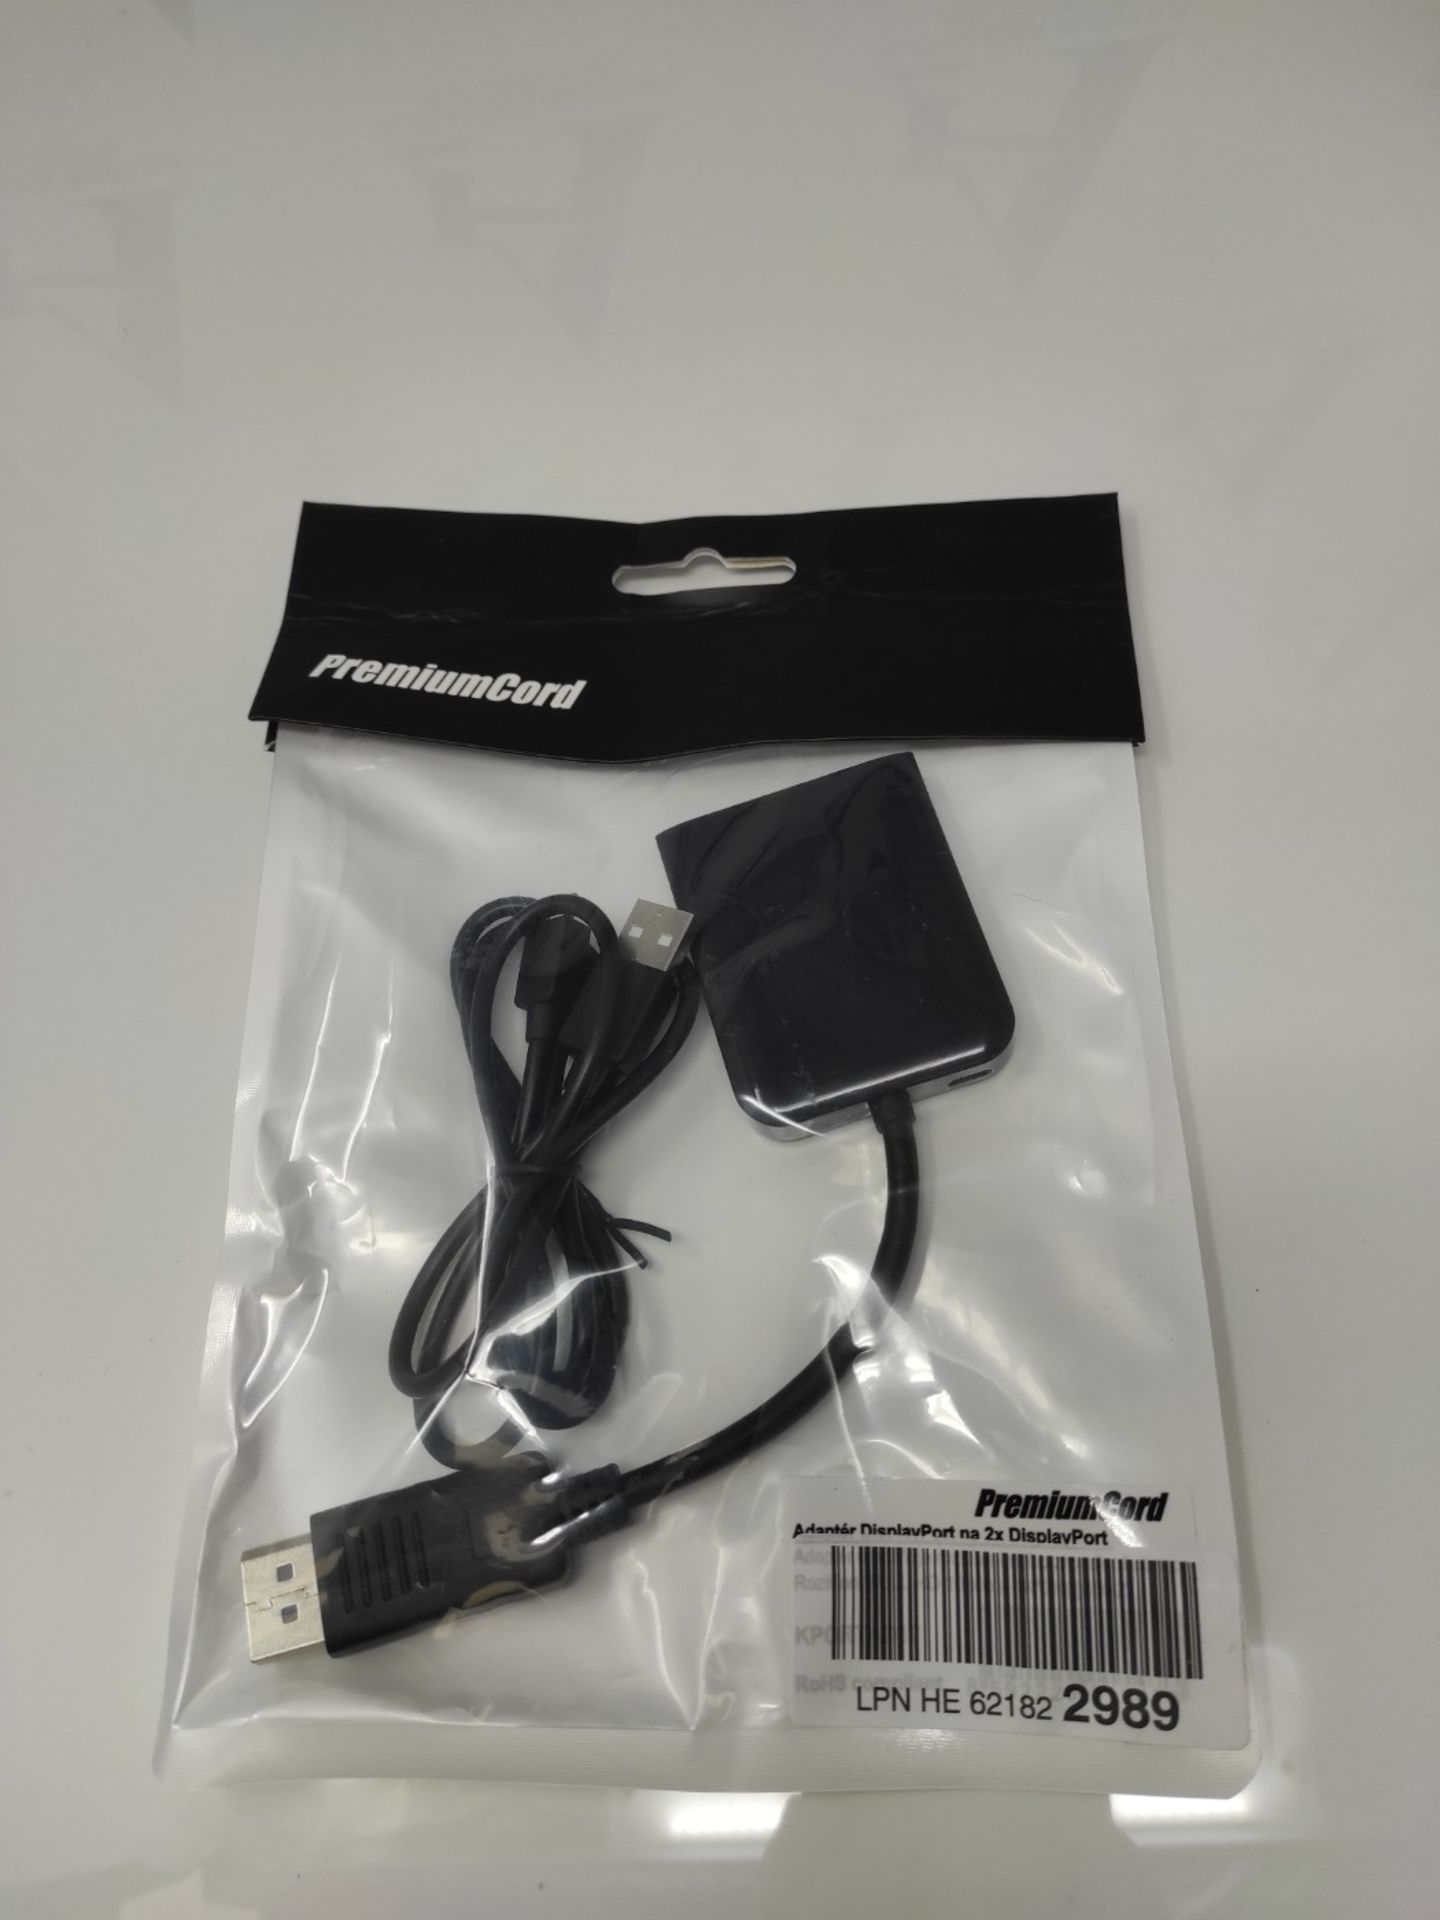 PremiumCord MST Adapter DisplayPort to 2X DisplayPort, Extended + Mirror Function, Vid - Image 2 of 3